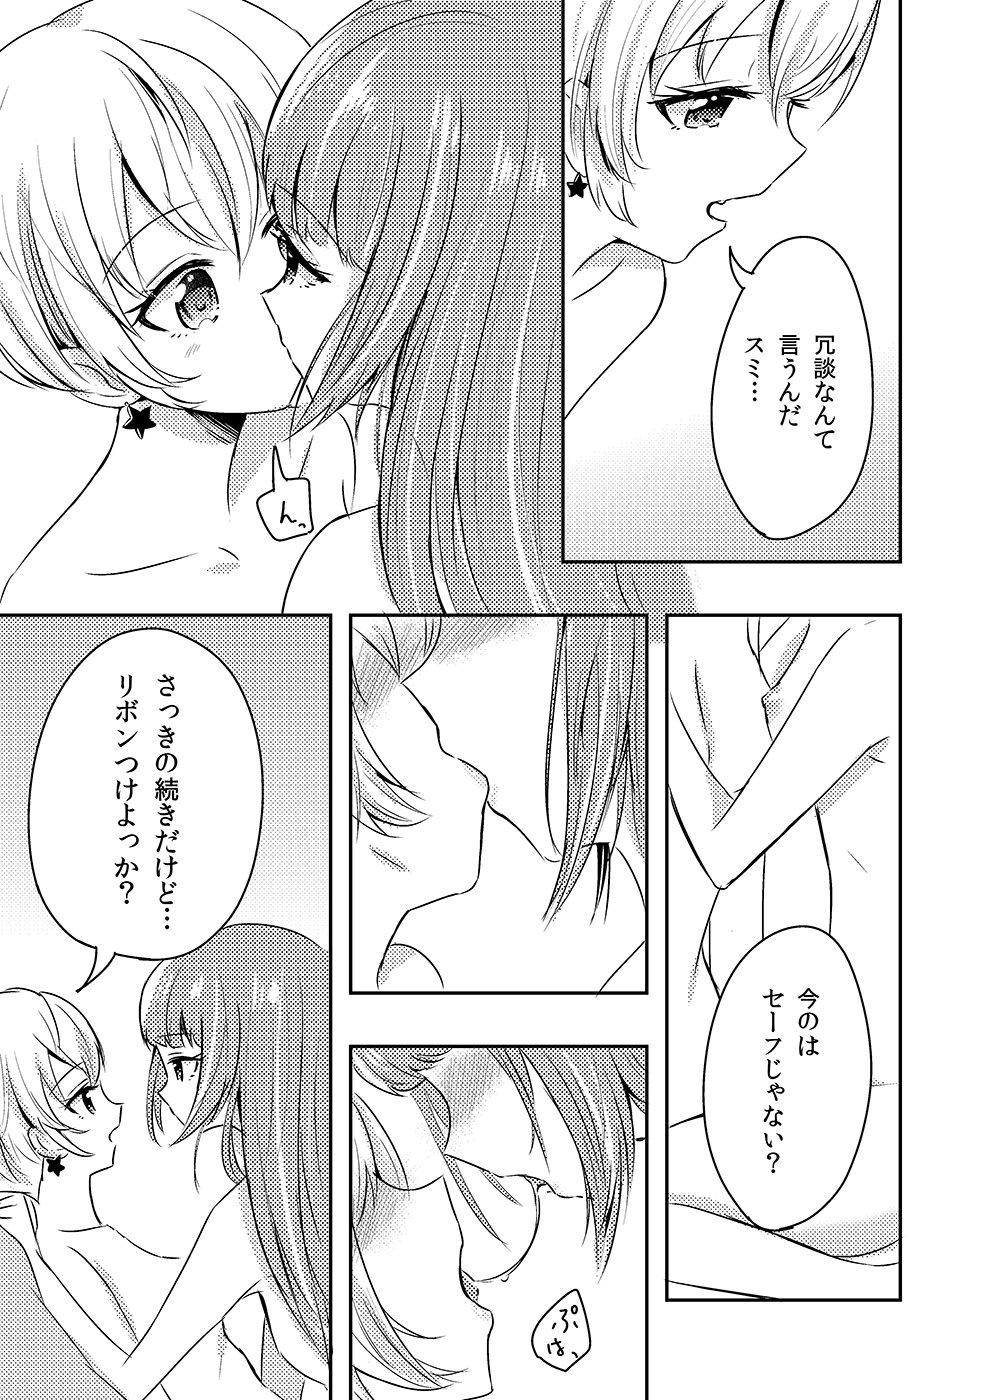 Slim Who contributed to loveless sex joint two years ago! Yuusumi manga. - Aikatsu Titjob - Page 3